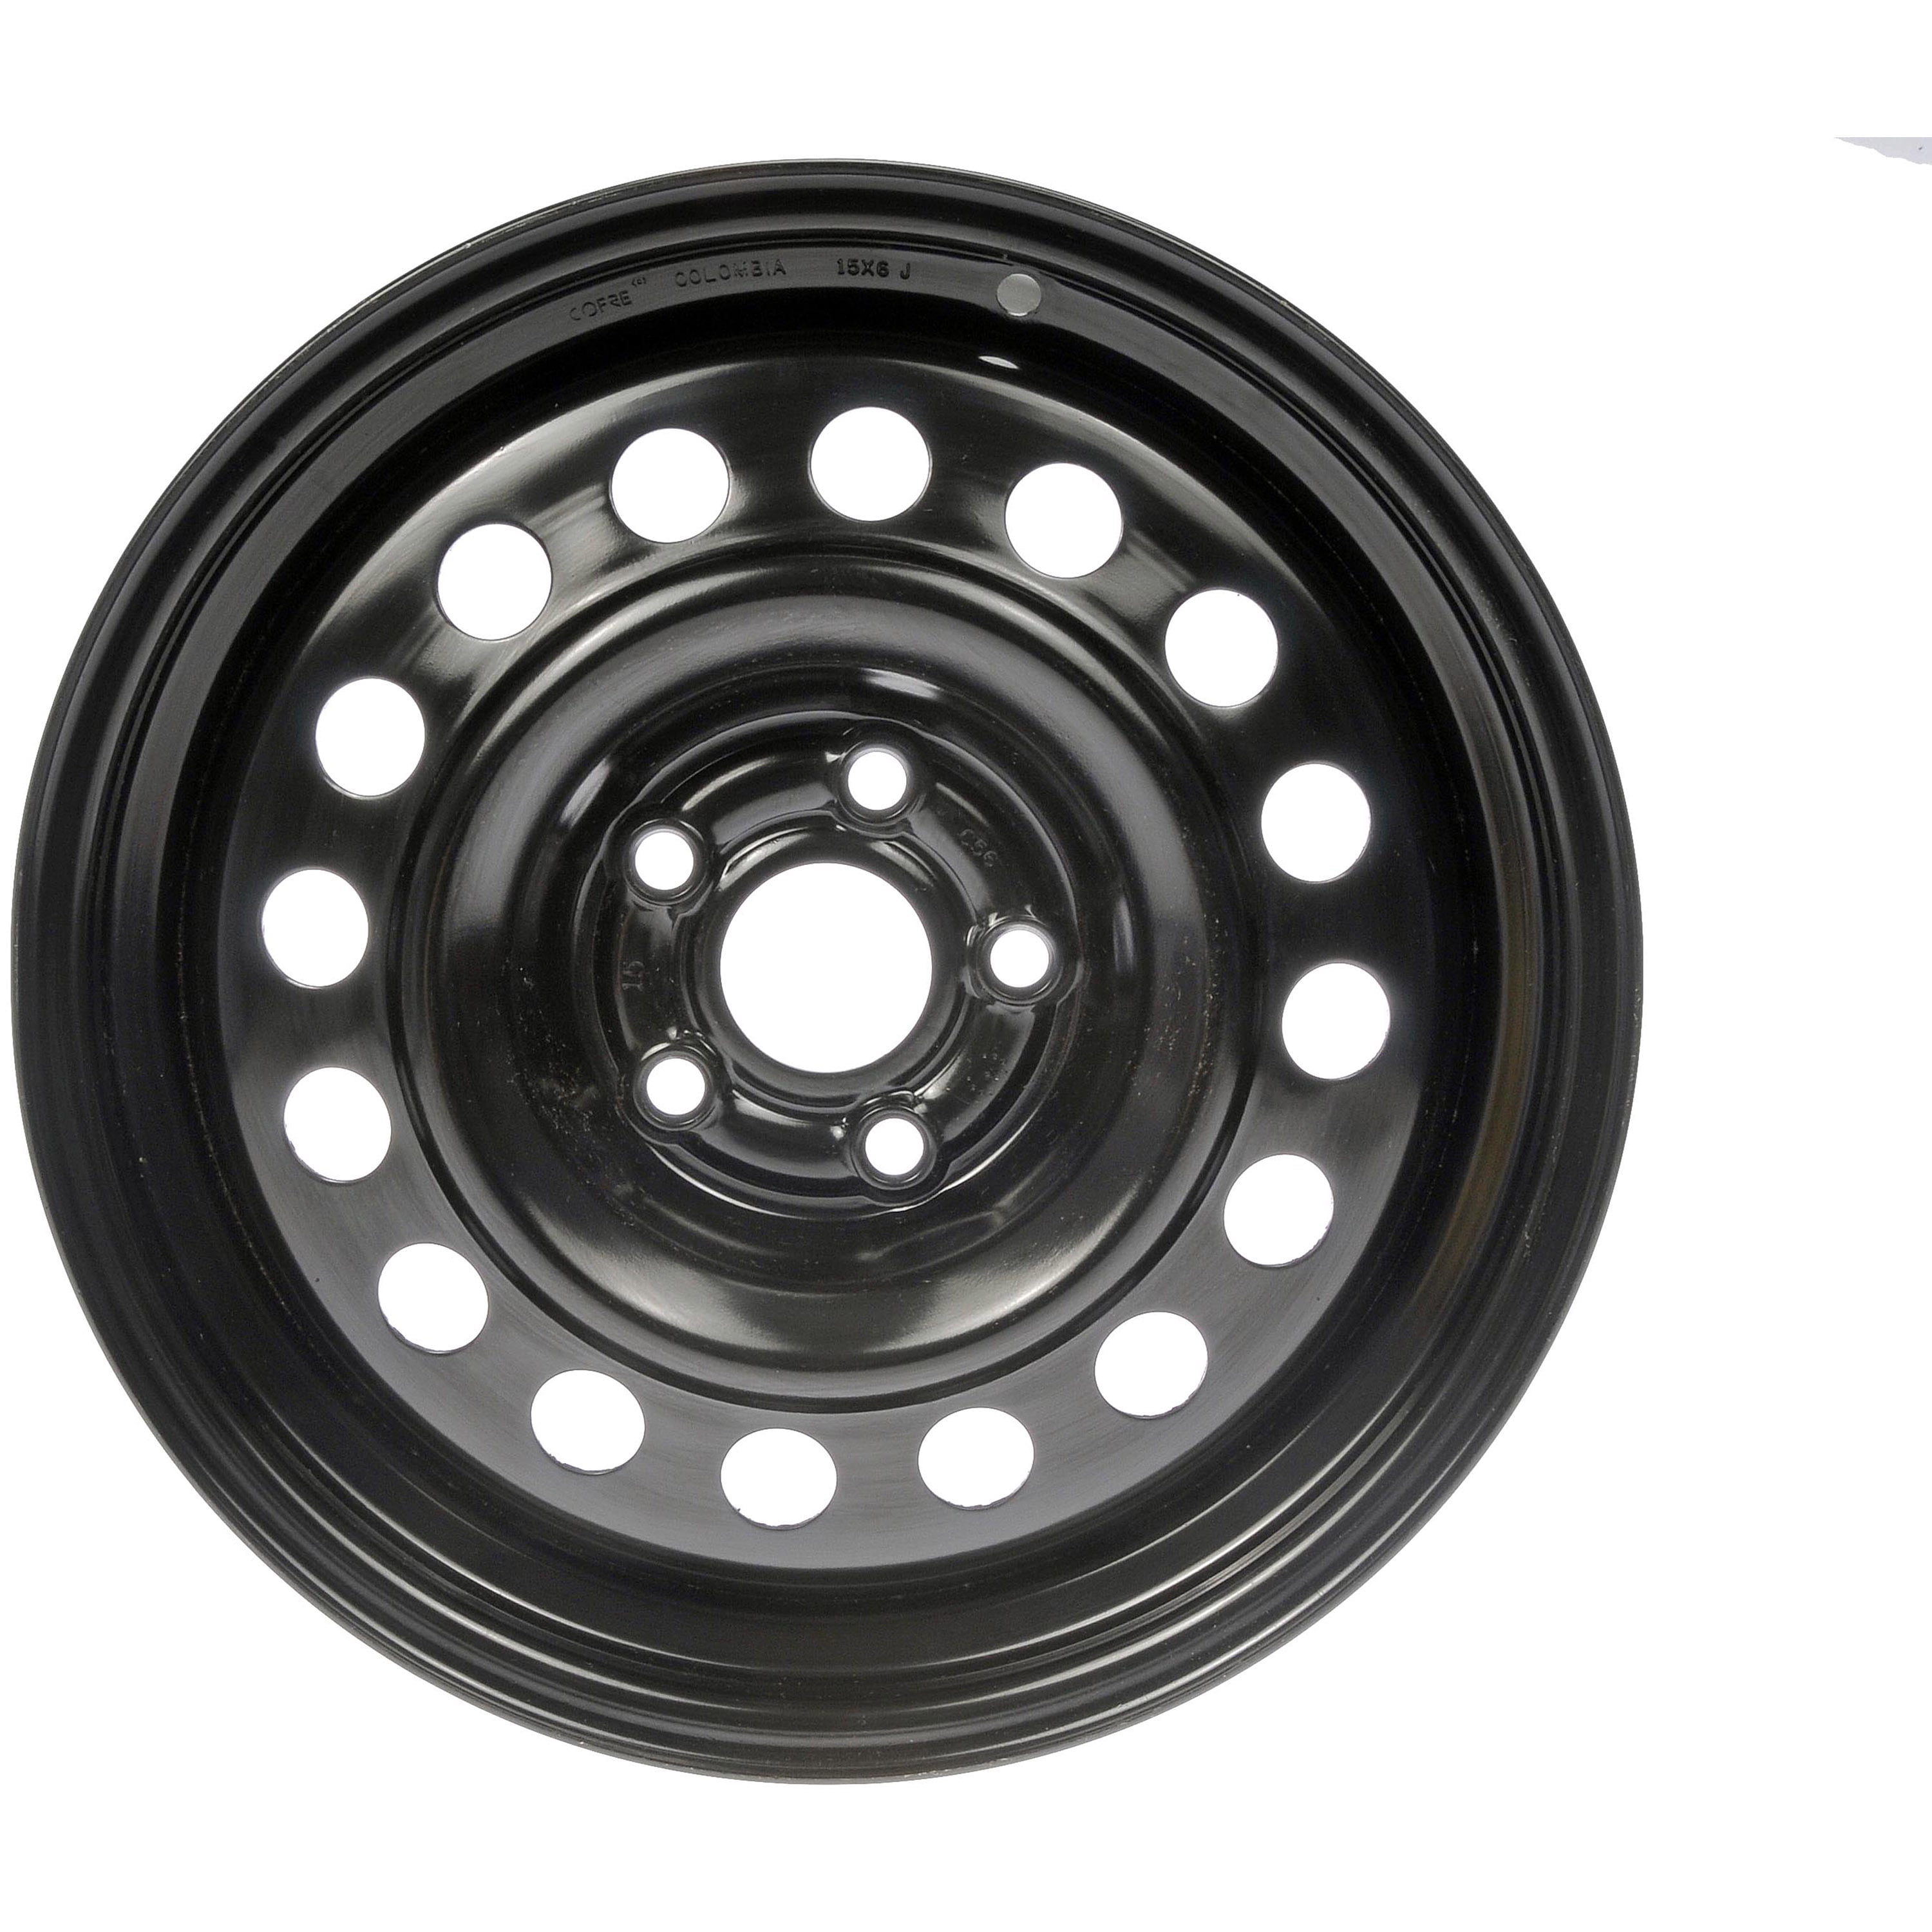 NEW 16 Black Steel Wheel Rim Fits Toyota Matrix 5 Lug WE45496N